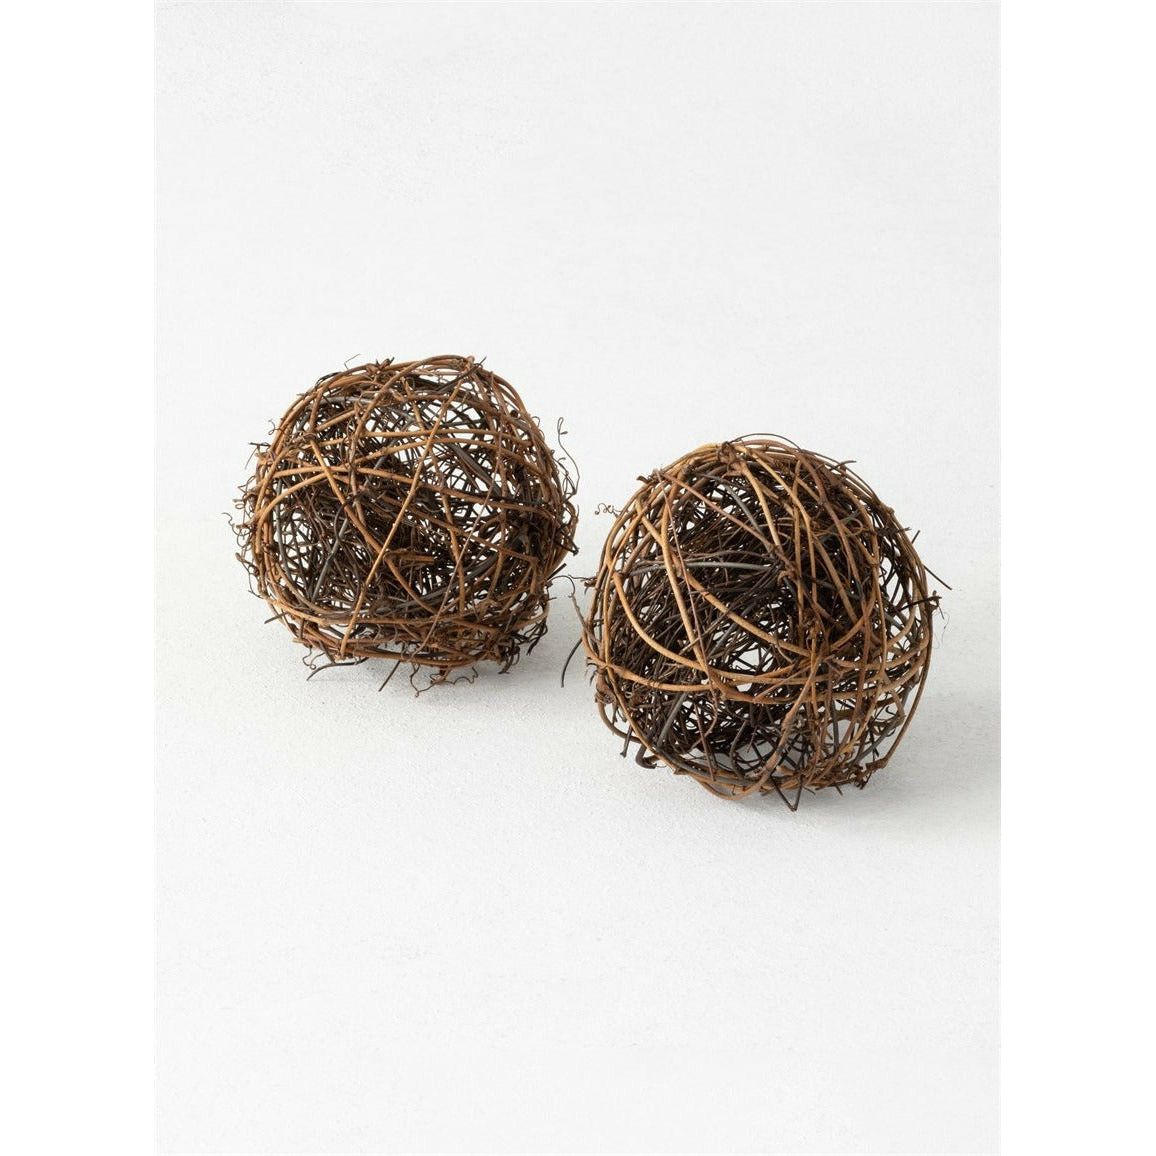 Byher Decorative Ball Natural Green Moss Handmade (3.5 inch-Set of 6)